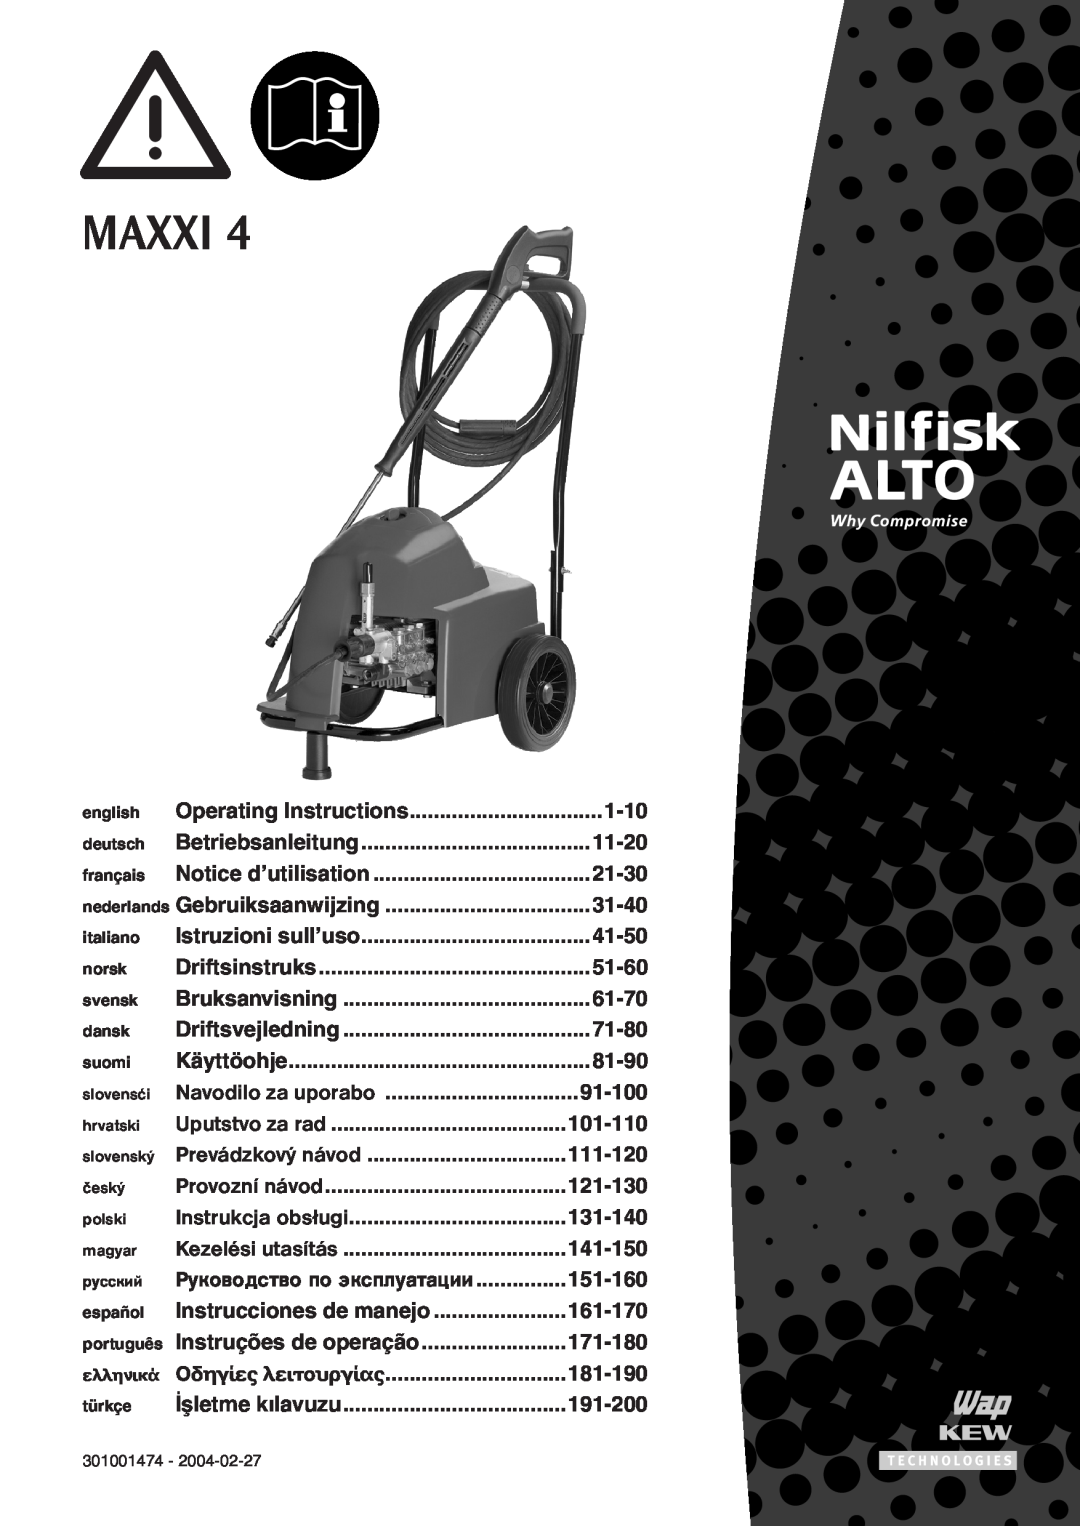 Nilfisk-ALTO MAXXI 4 manual 888,  